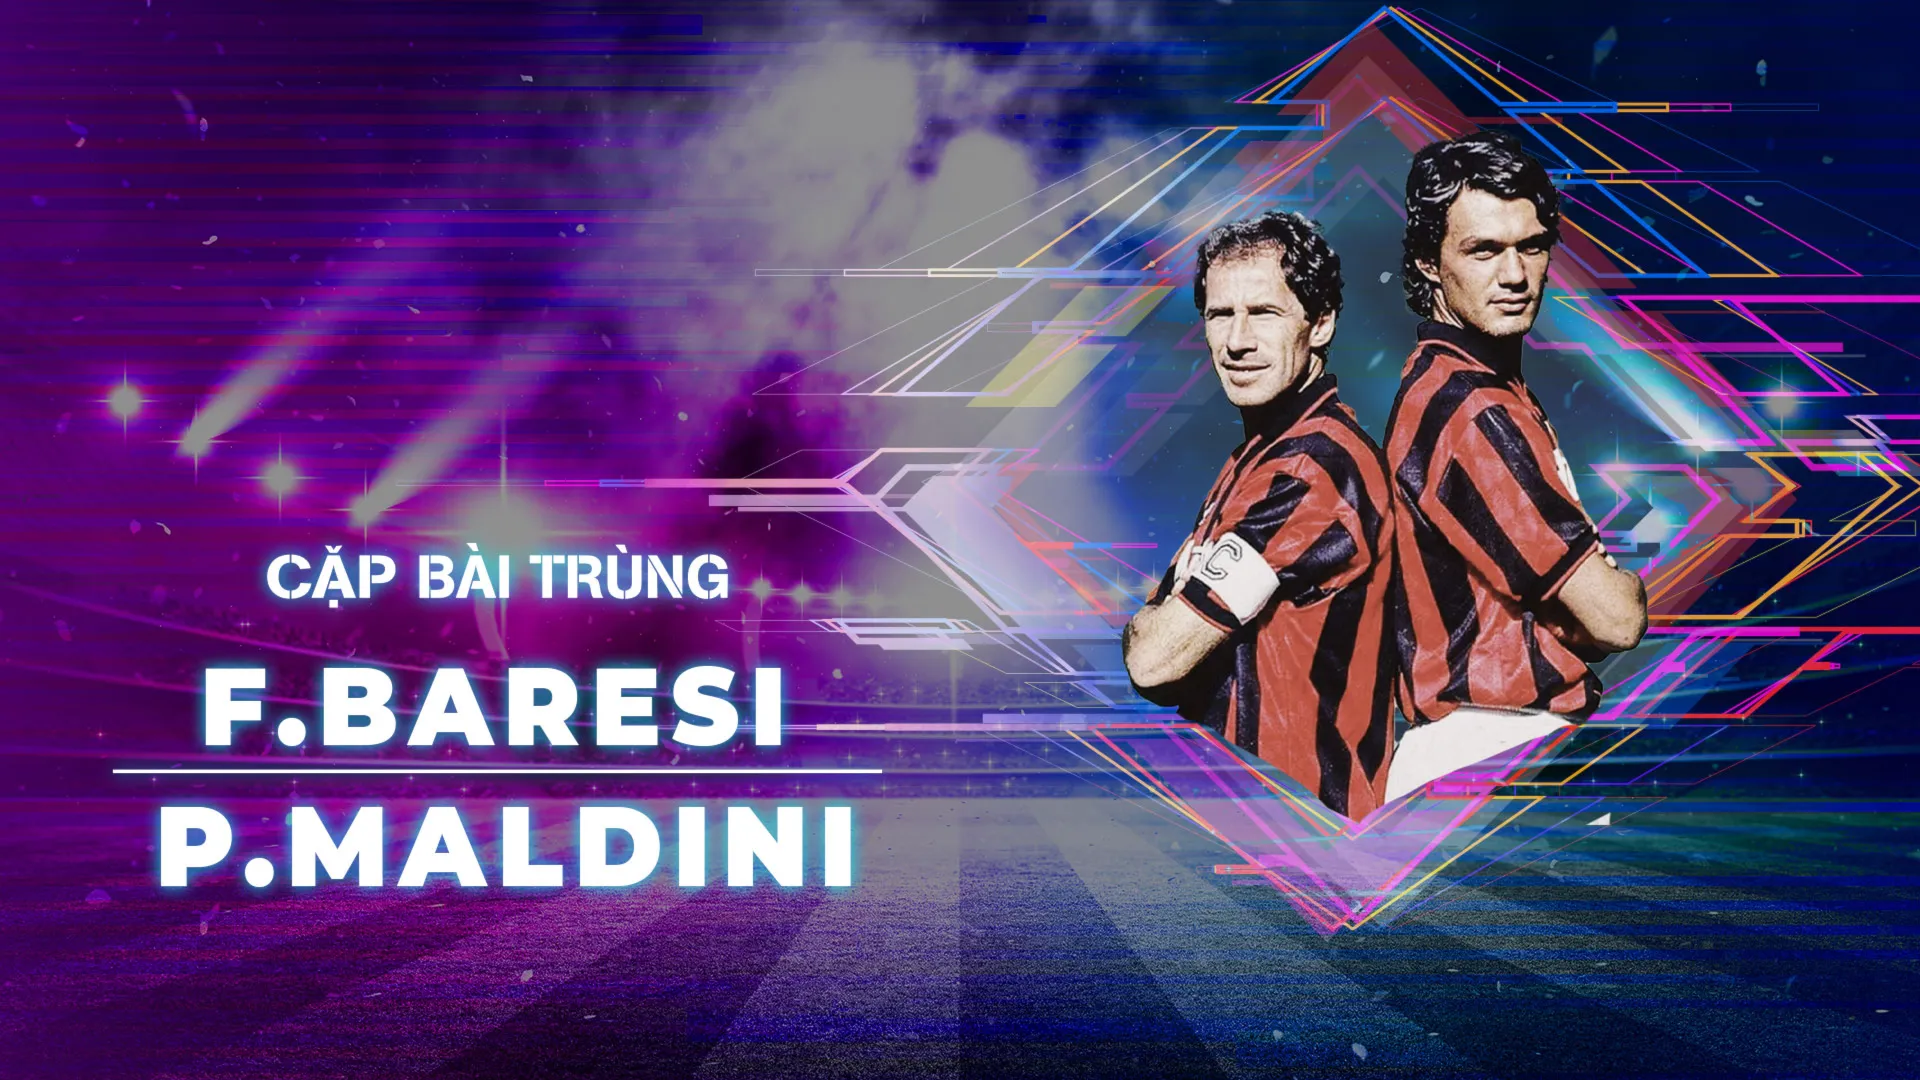 Franco Baresi - Paolo Maldini | Cặp Bài Trùng